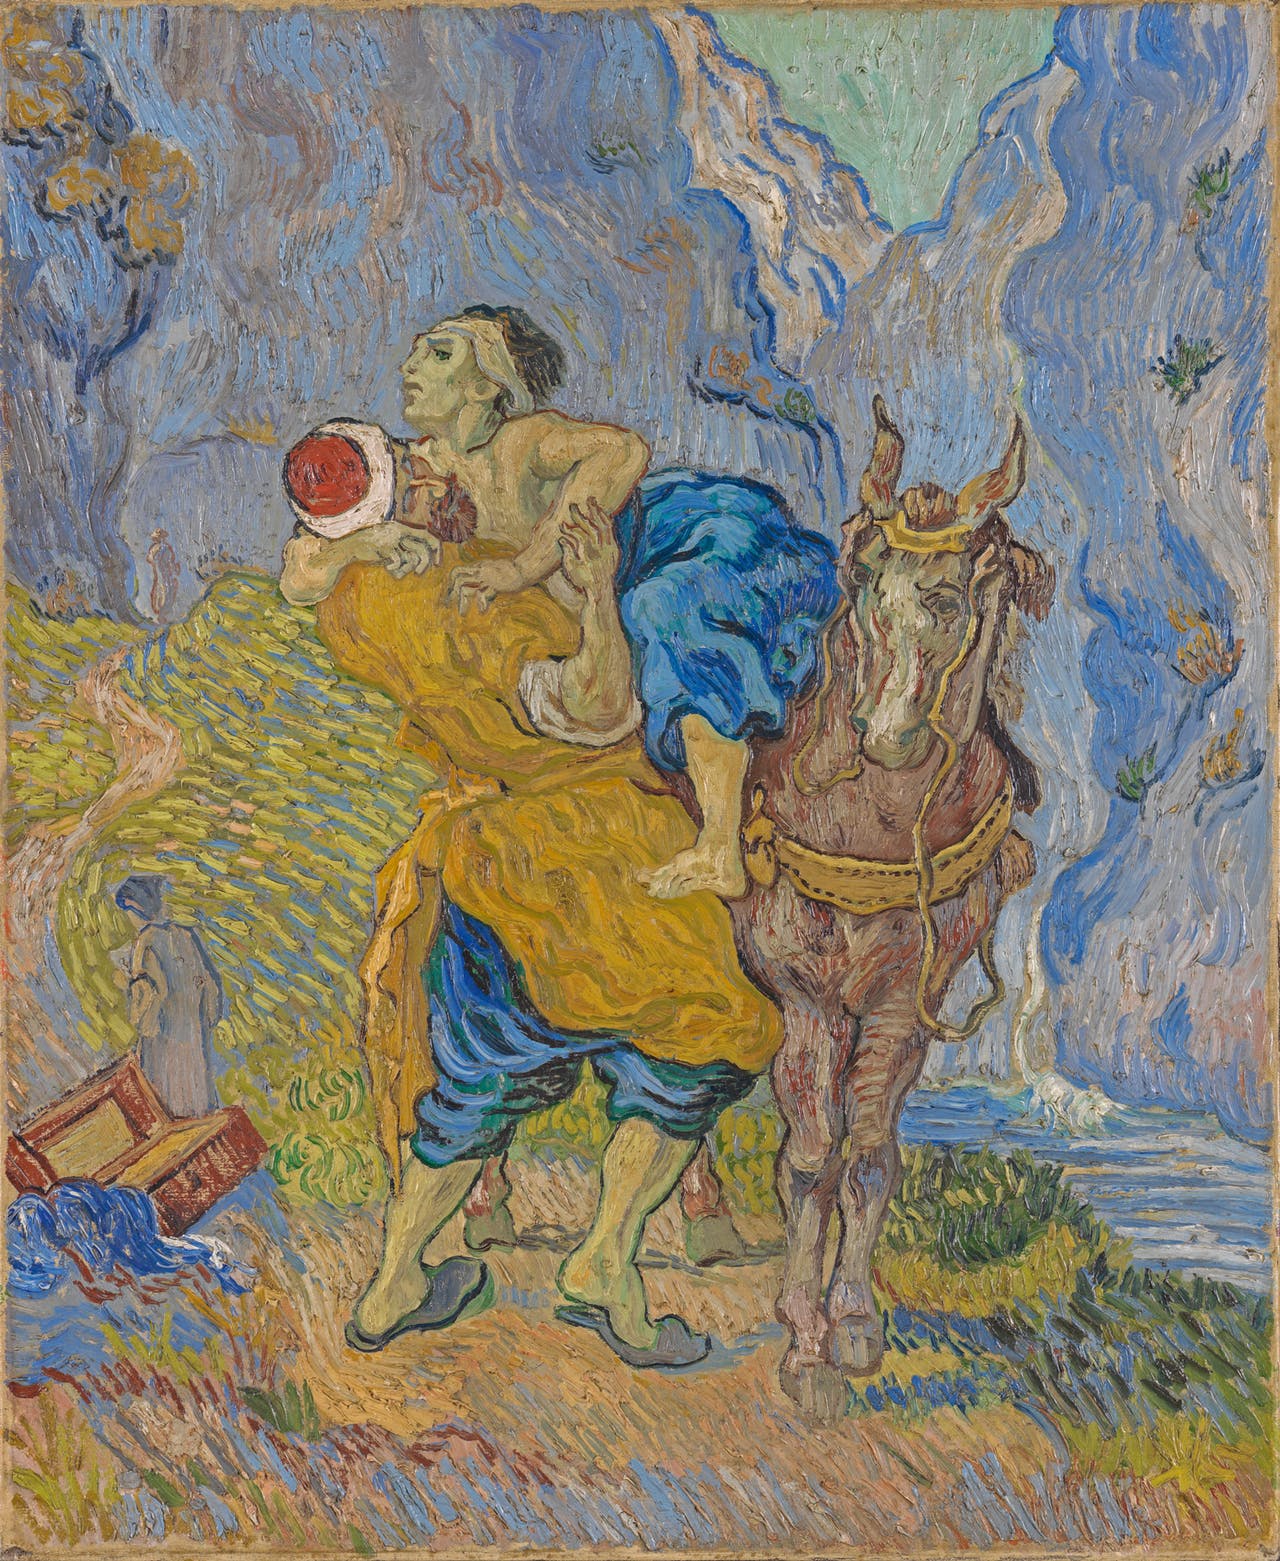 Good Samaritan by Vincent van Gogh - Early May 1890 - 73 × 59.5 cm Kröller-Müller Museum